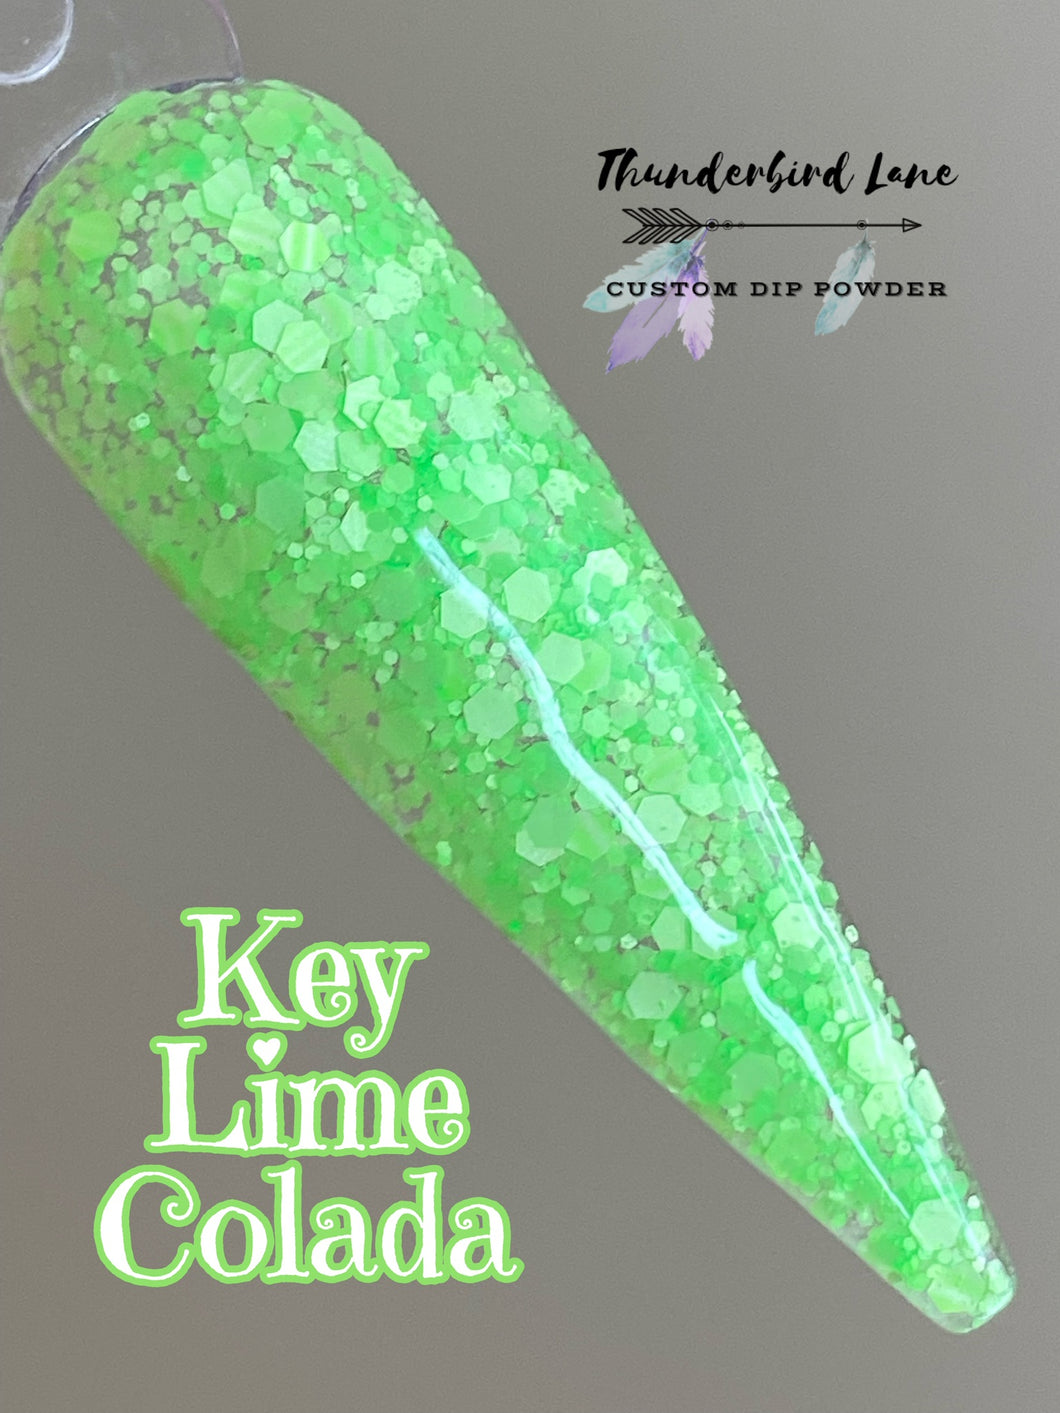 Key Lime Colada